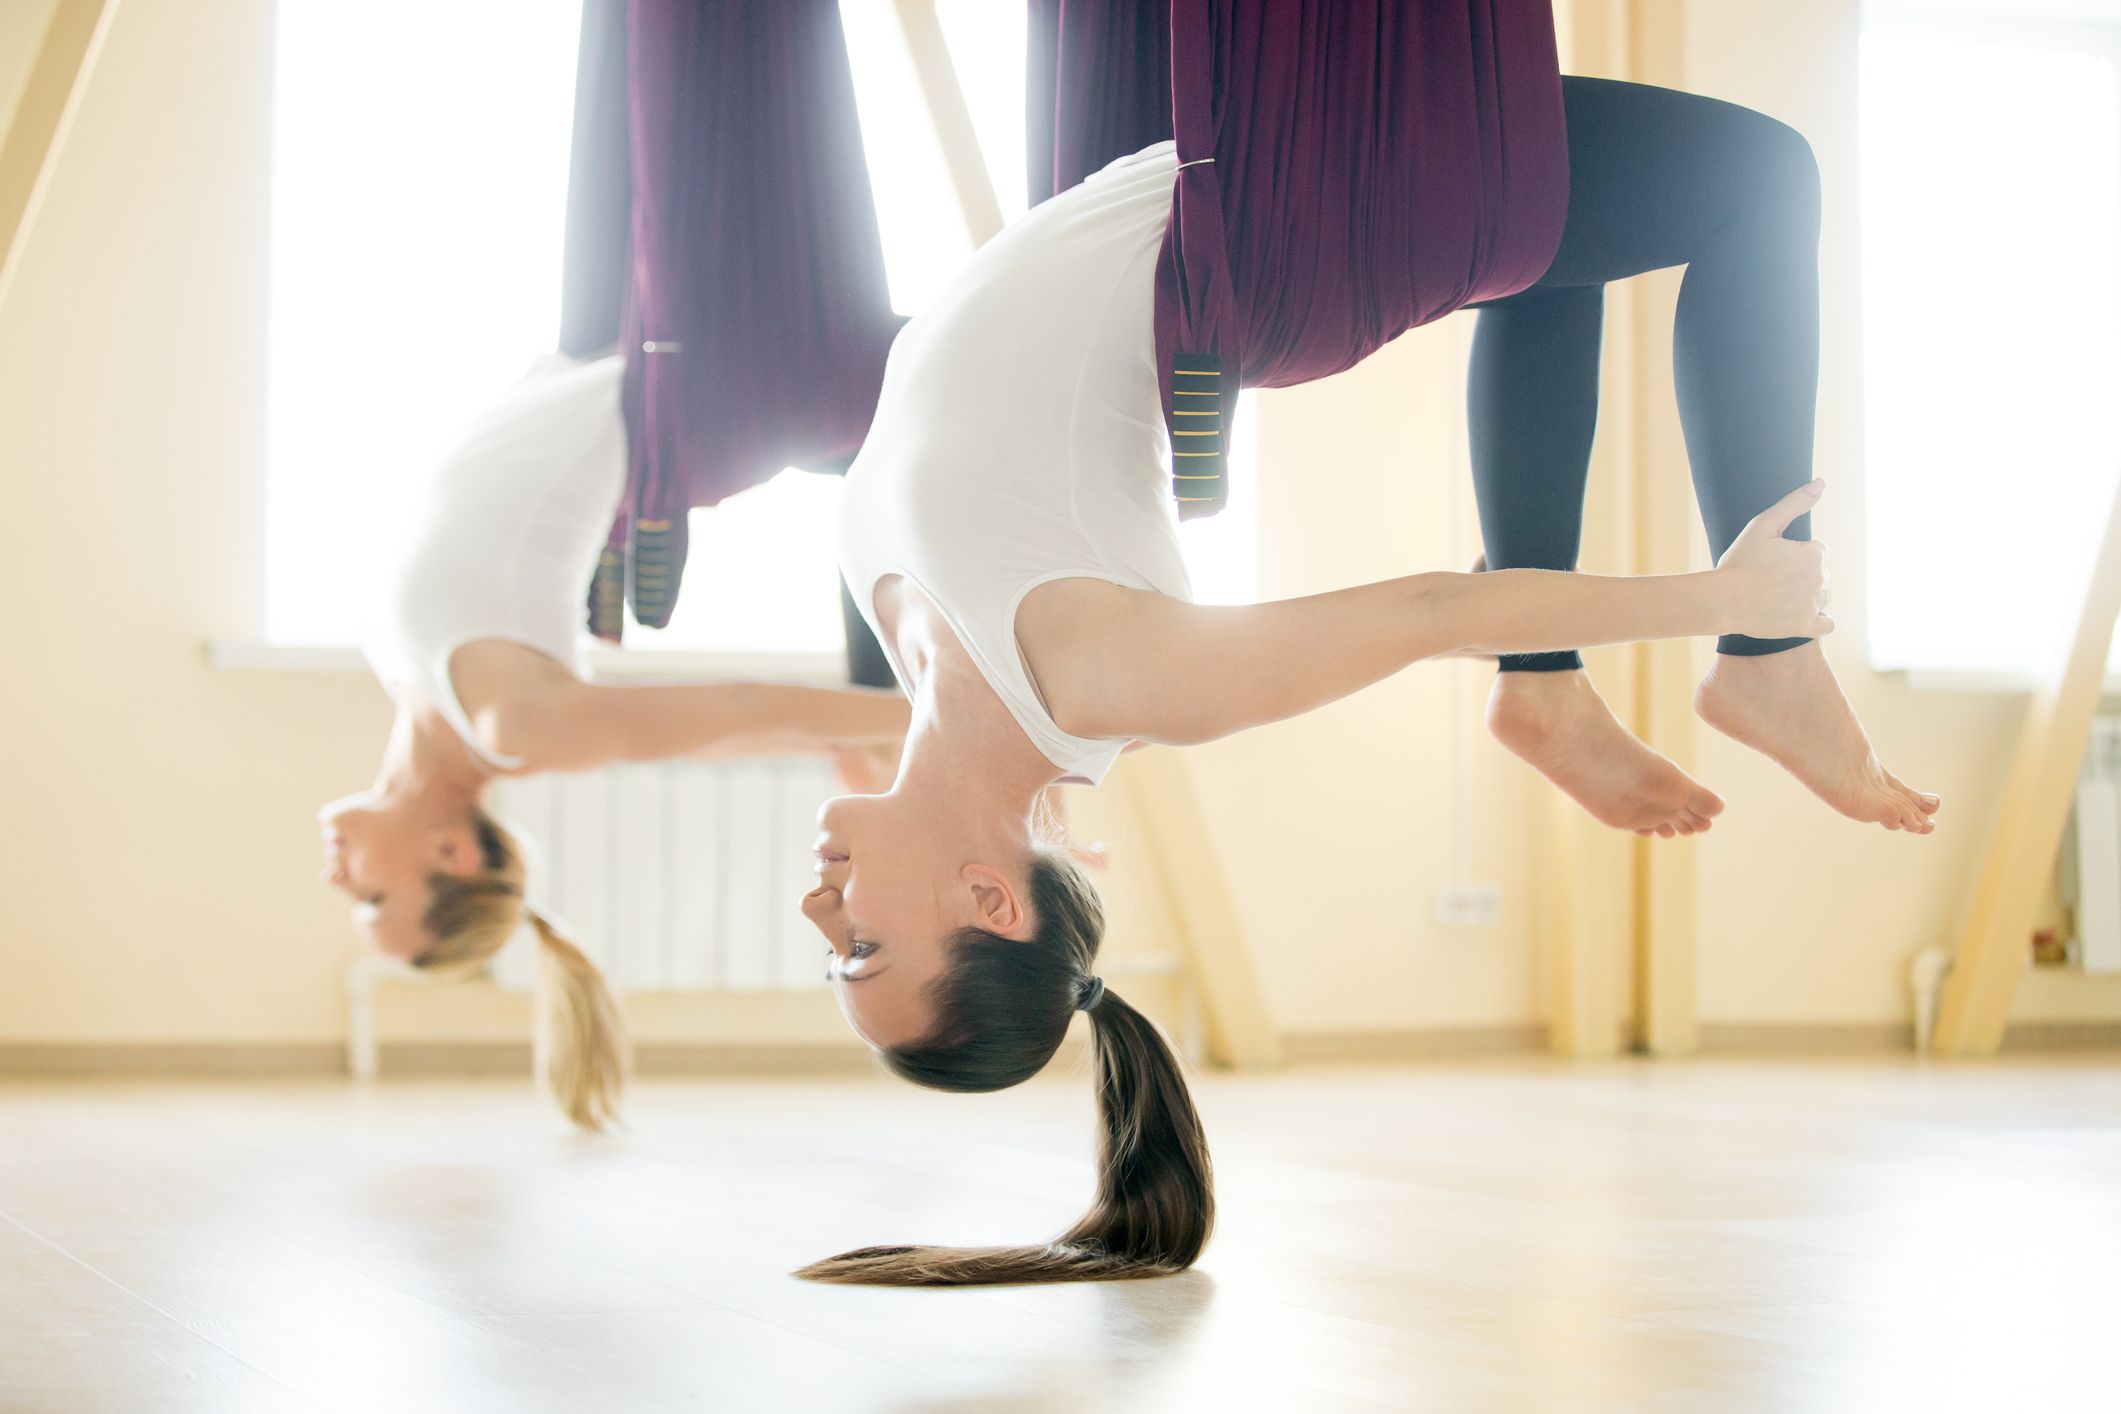 5 Easy Yoga Swing Poses for Beginners | Gravotonics